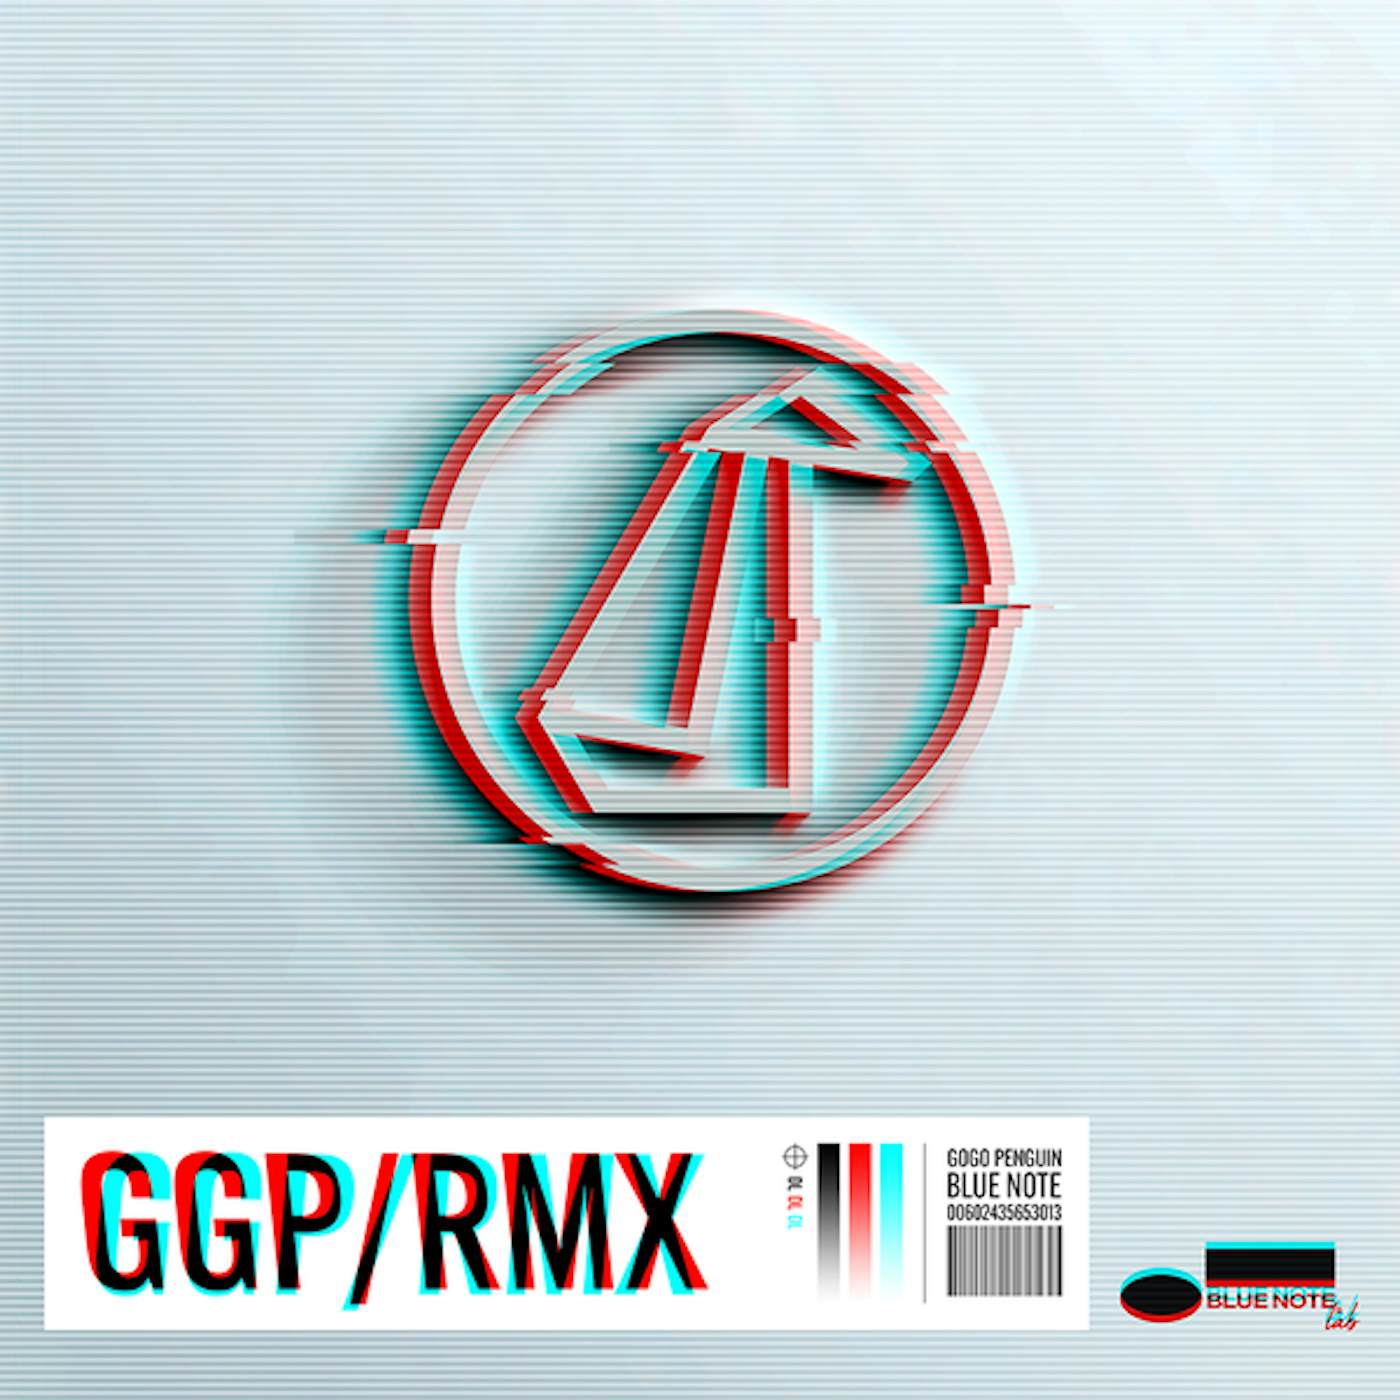 GoGo Penguin GGP / RMX Vinyl Record